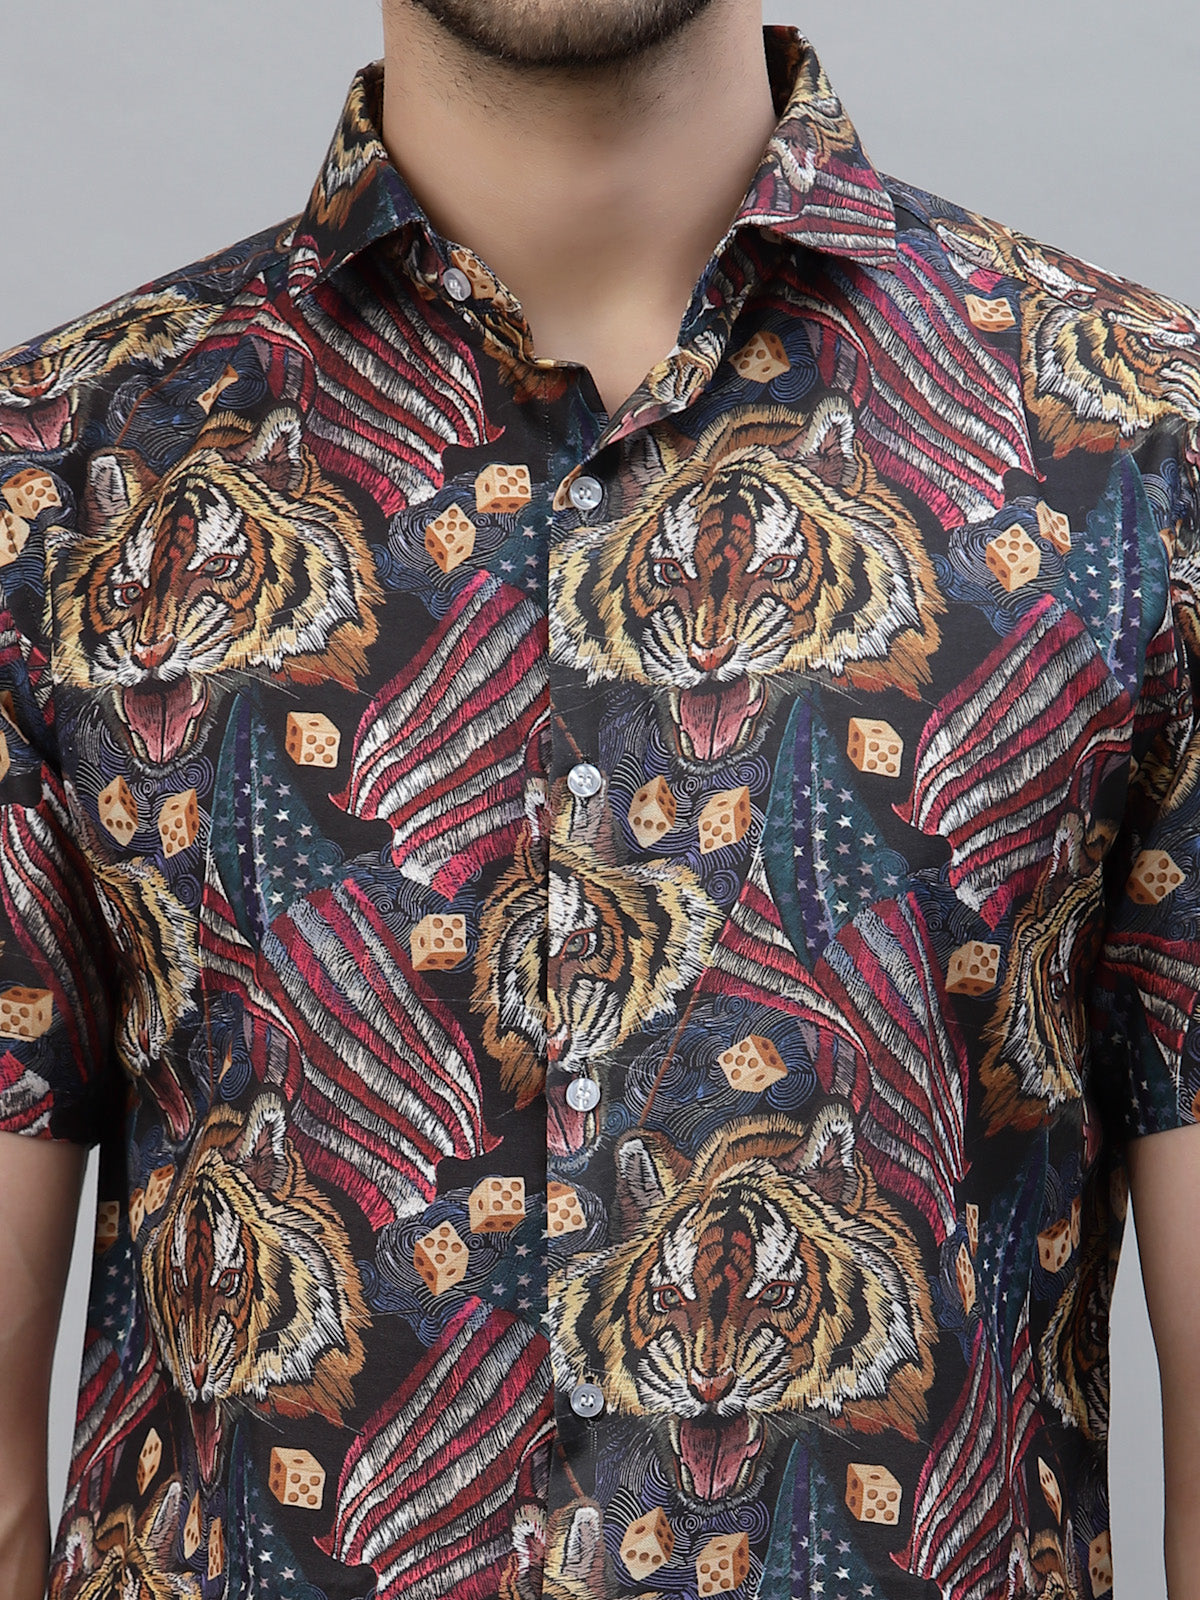 Tiger Flag Half Sleeve Shirt By Gavin Paris